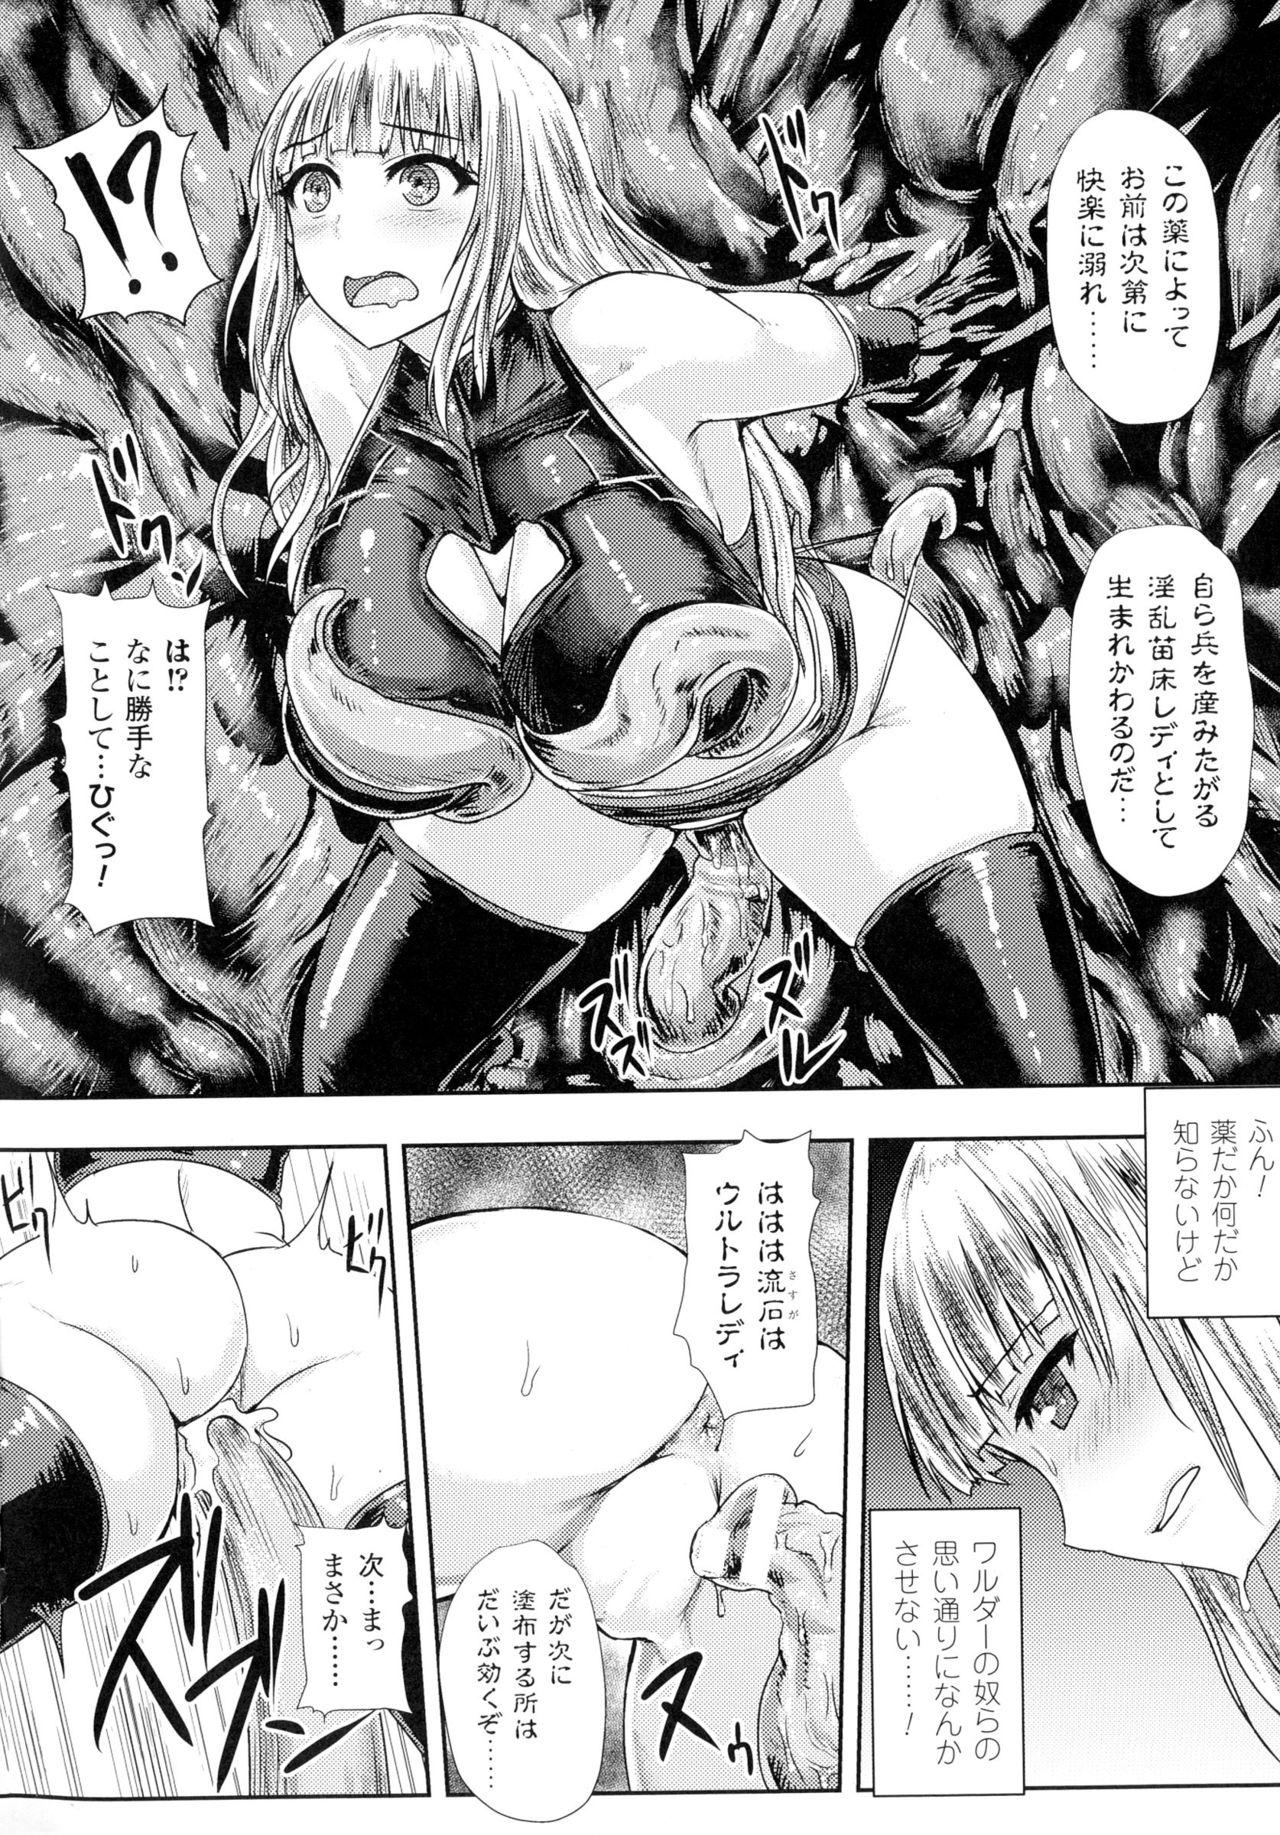 Seigi no Heroine Kangoku File DX Vol. 1 34